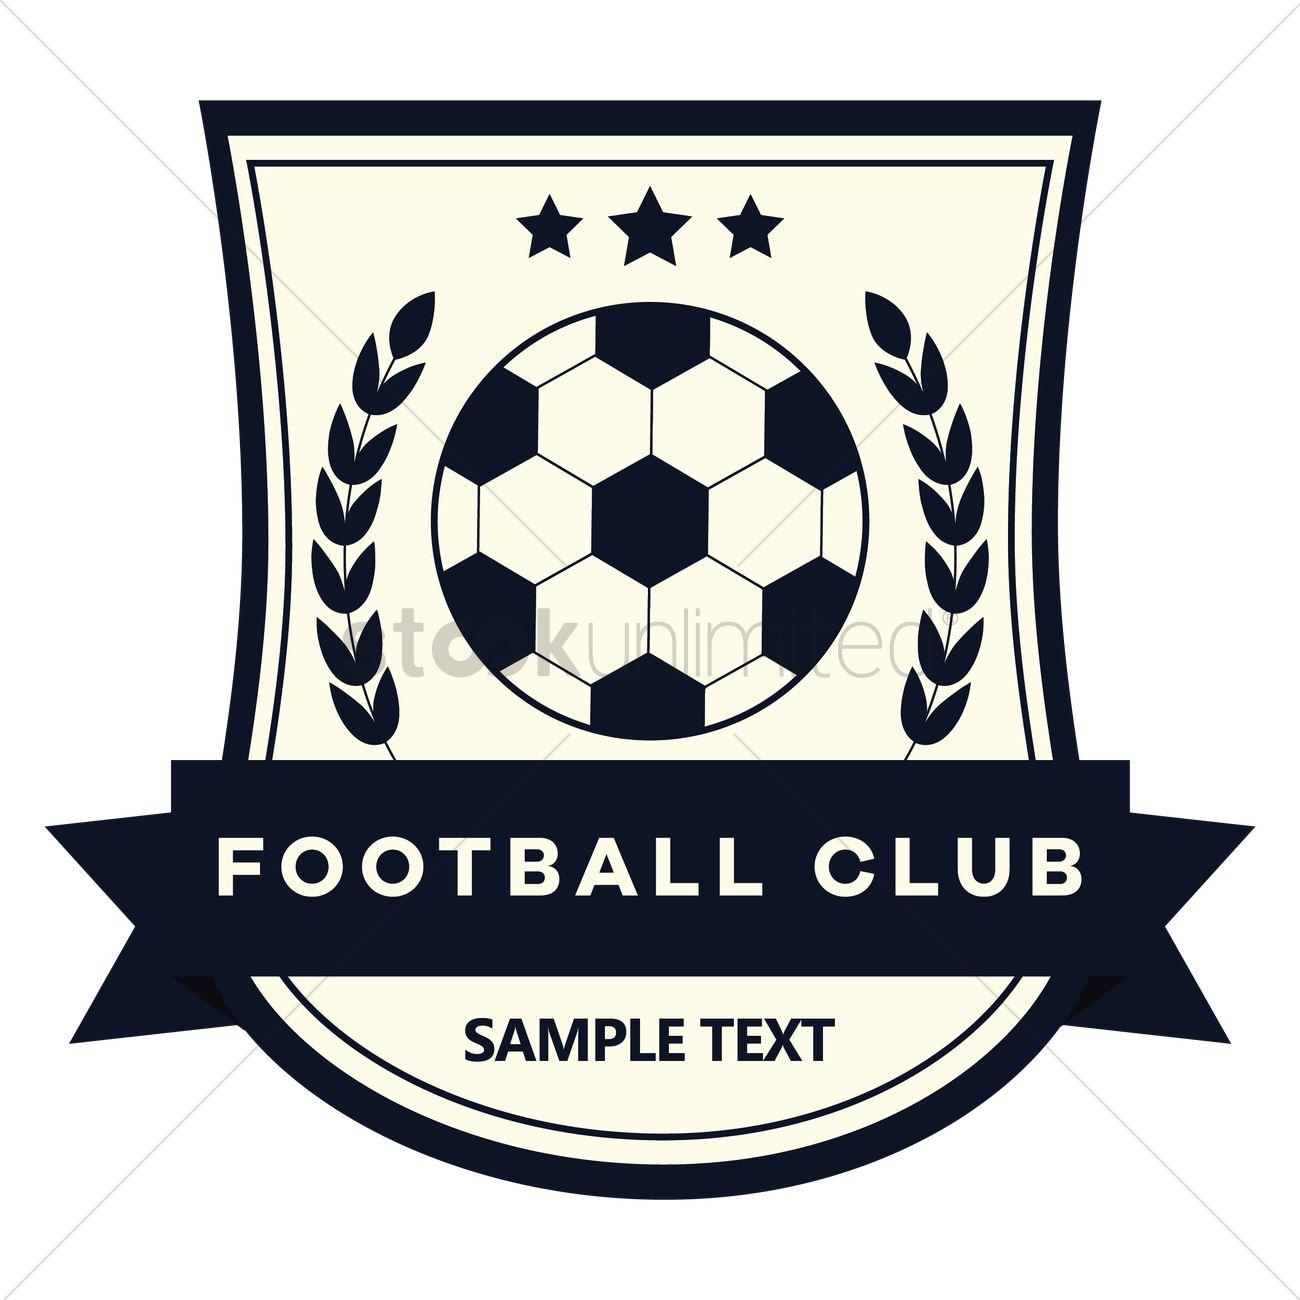 Black and White Football Logo - Football club logo Vector Image